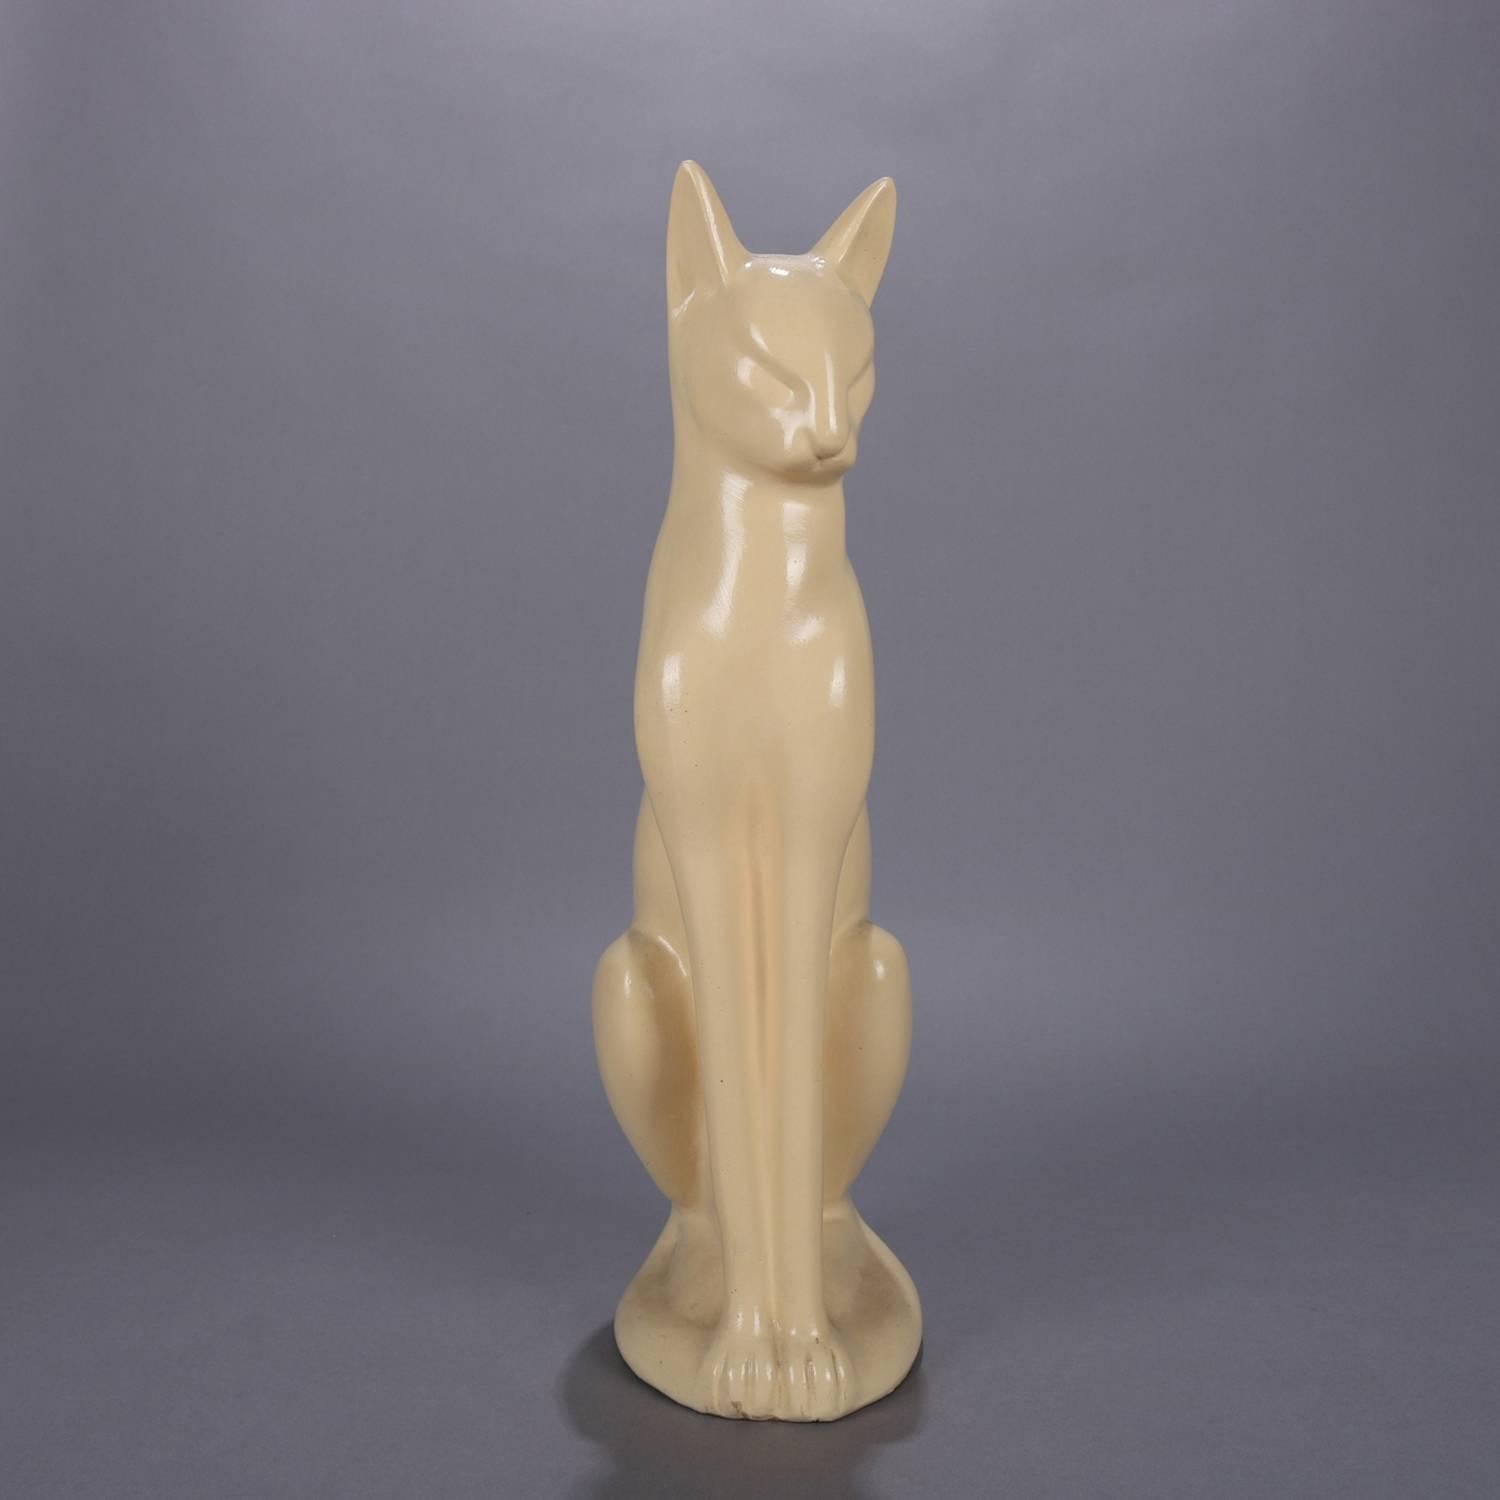 Large Ceramic Tile 6x6 inches Made in USA Siamese Cat 547 Art L.Dumas 